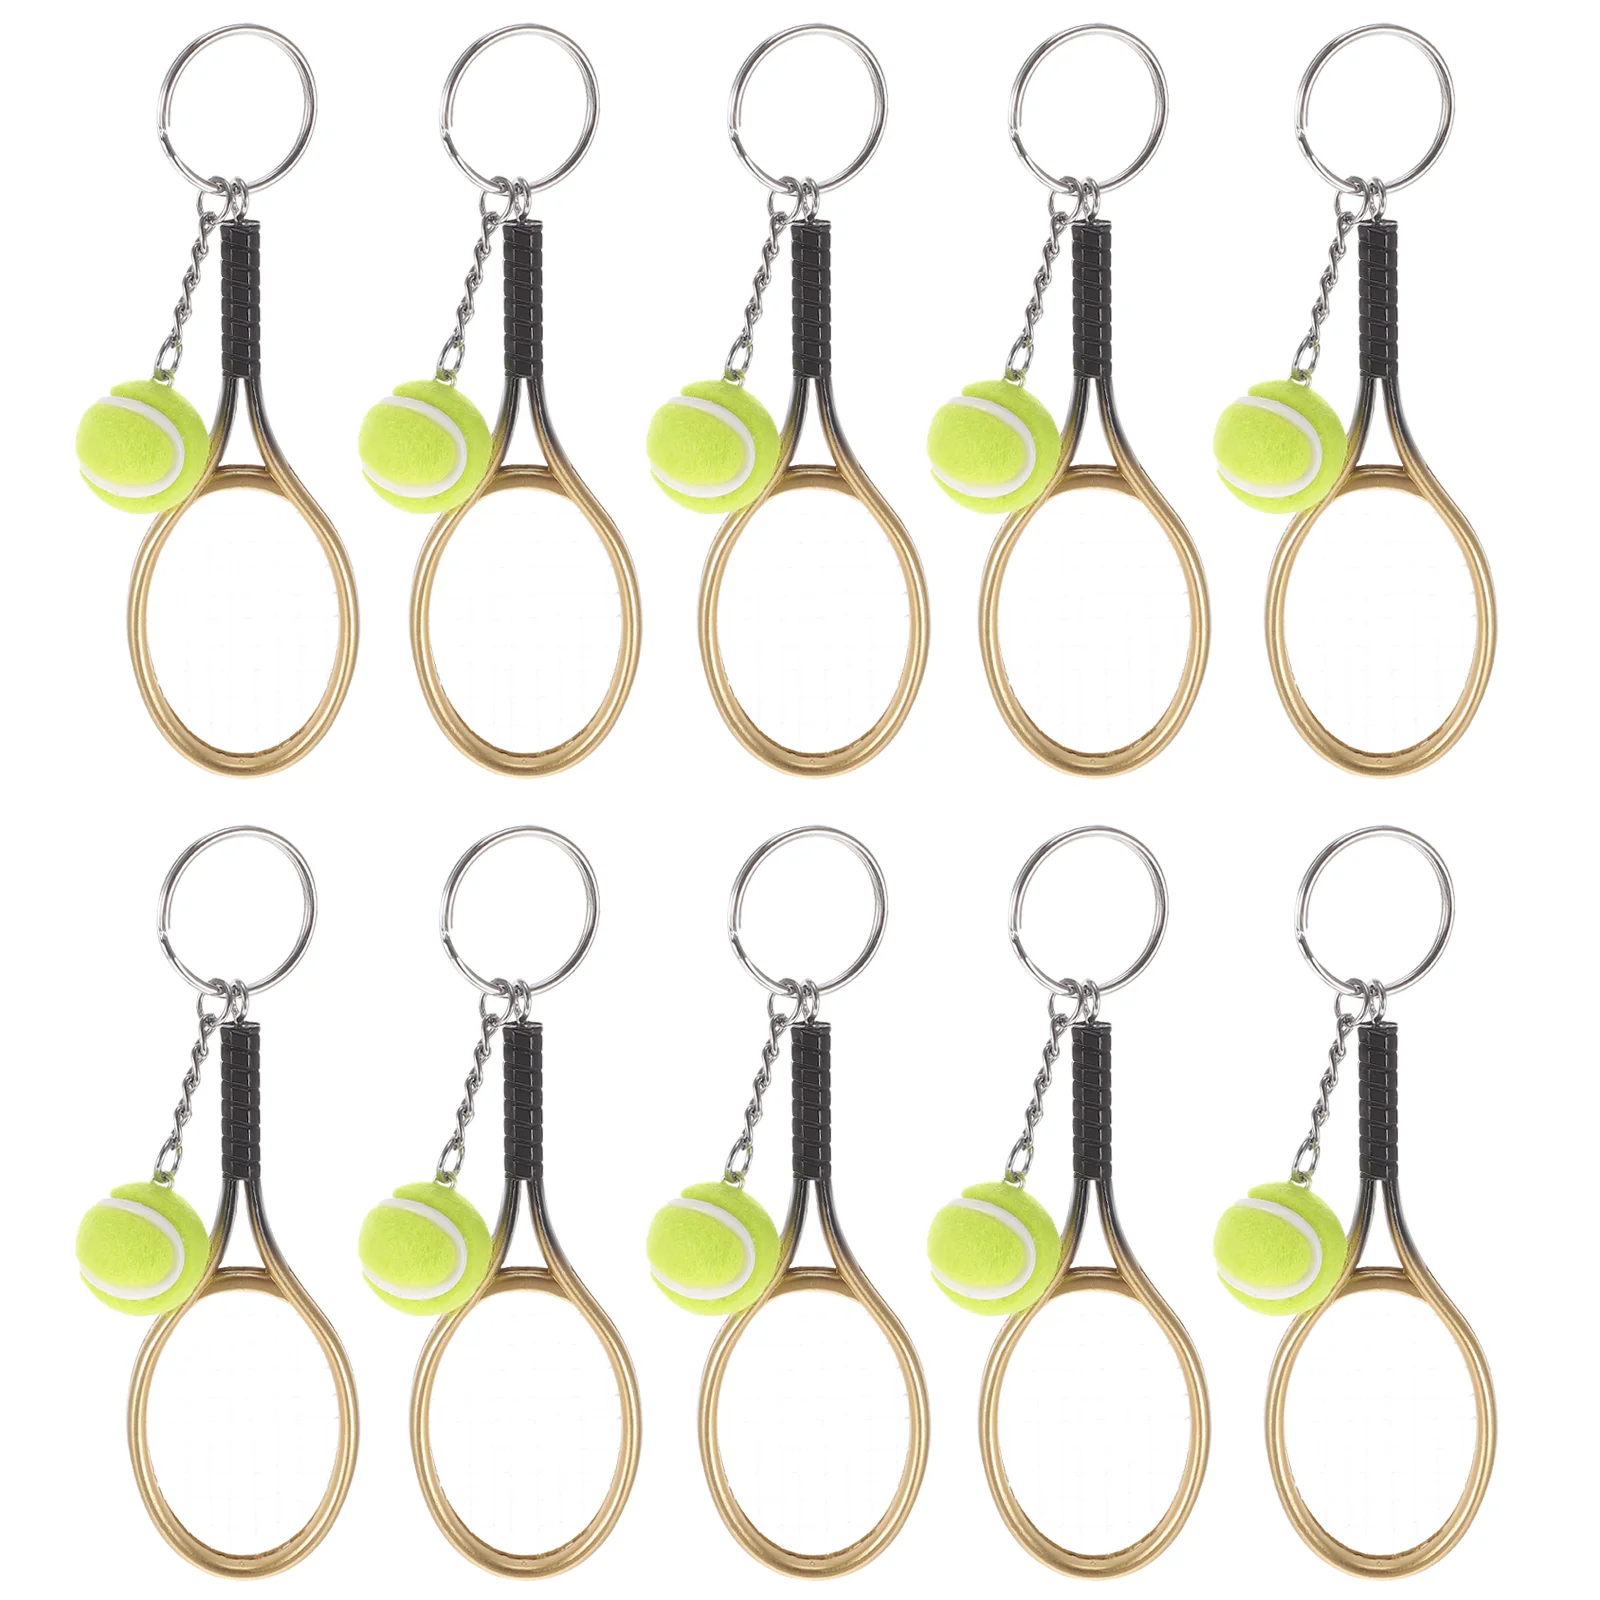 

10 Pcs Tennis Lover Gift Car Key Ring Sports Key Ring Party Goodie Bag Filler Tennis Keyring Tennis Racket Key Chain Car Pendant